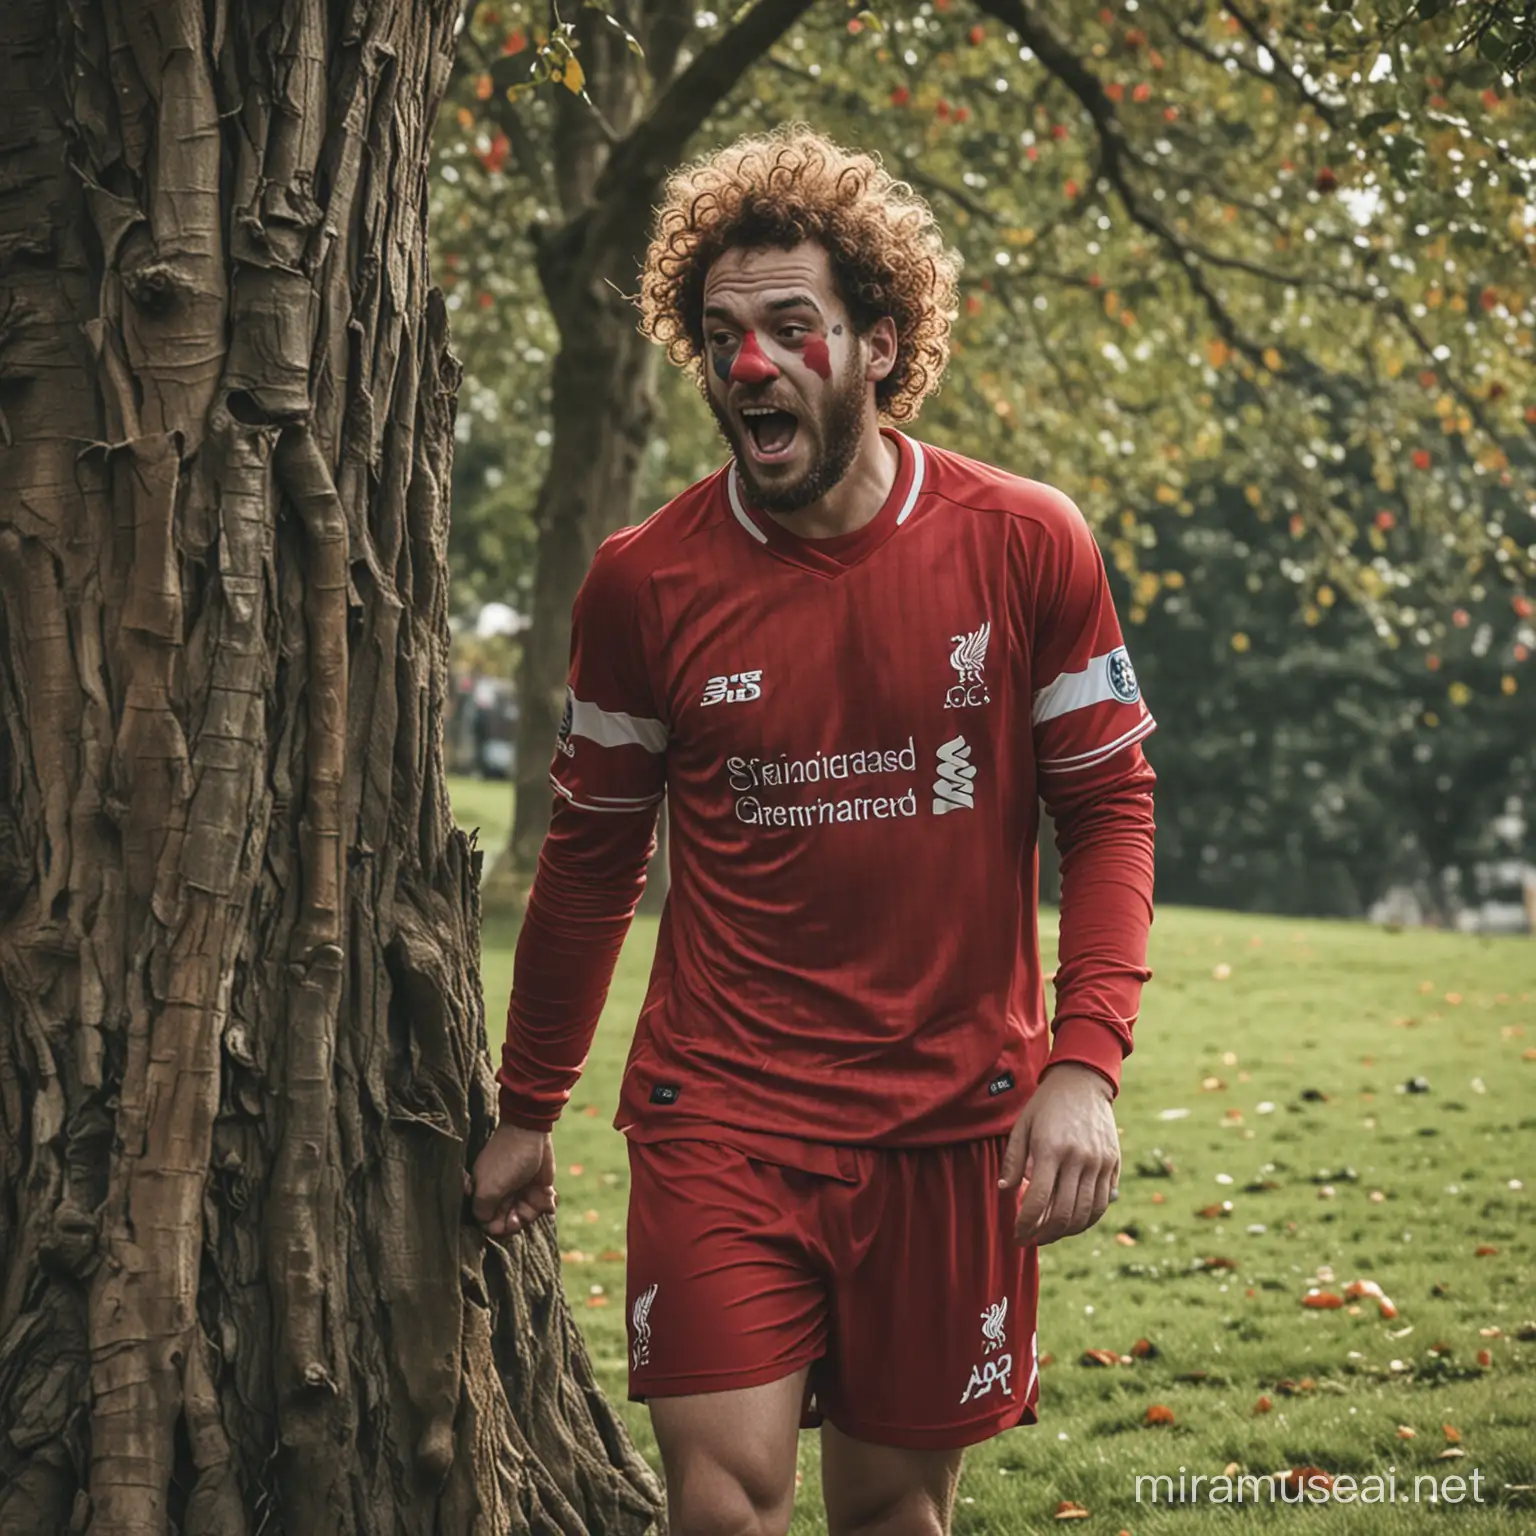 Liverpool Fan Clown Crying Under Tree Mocked by Rival Fans